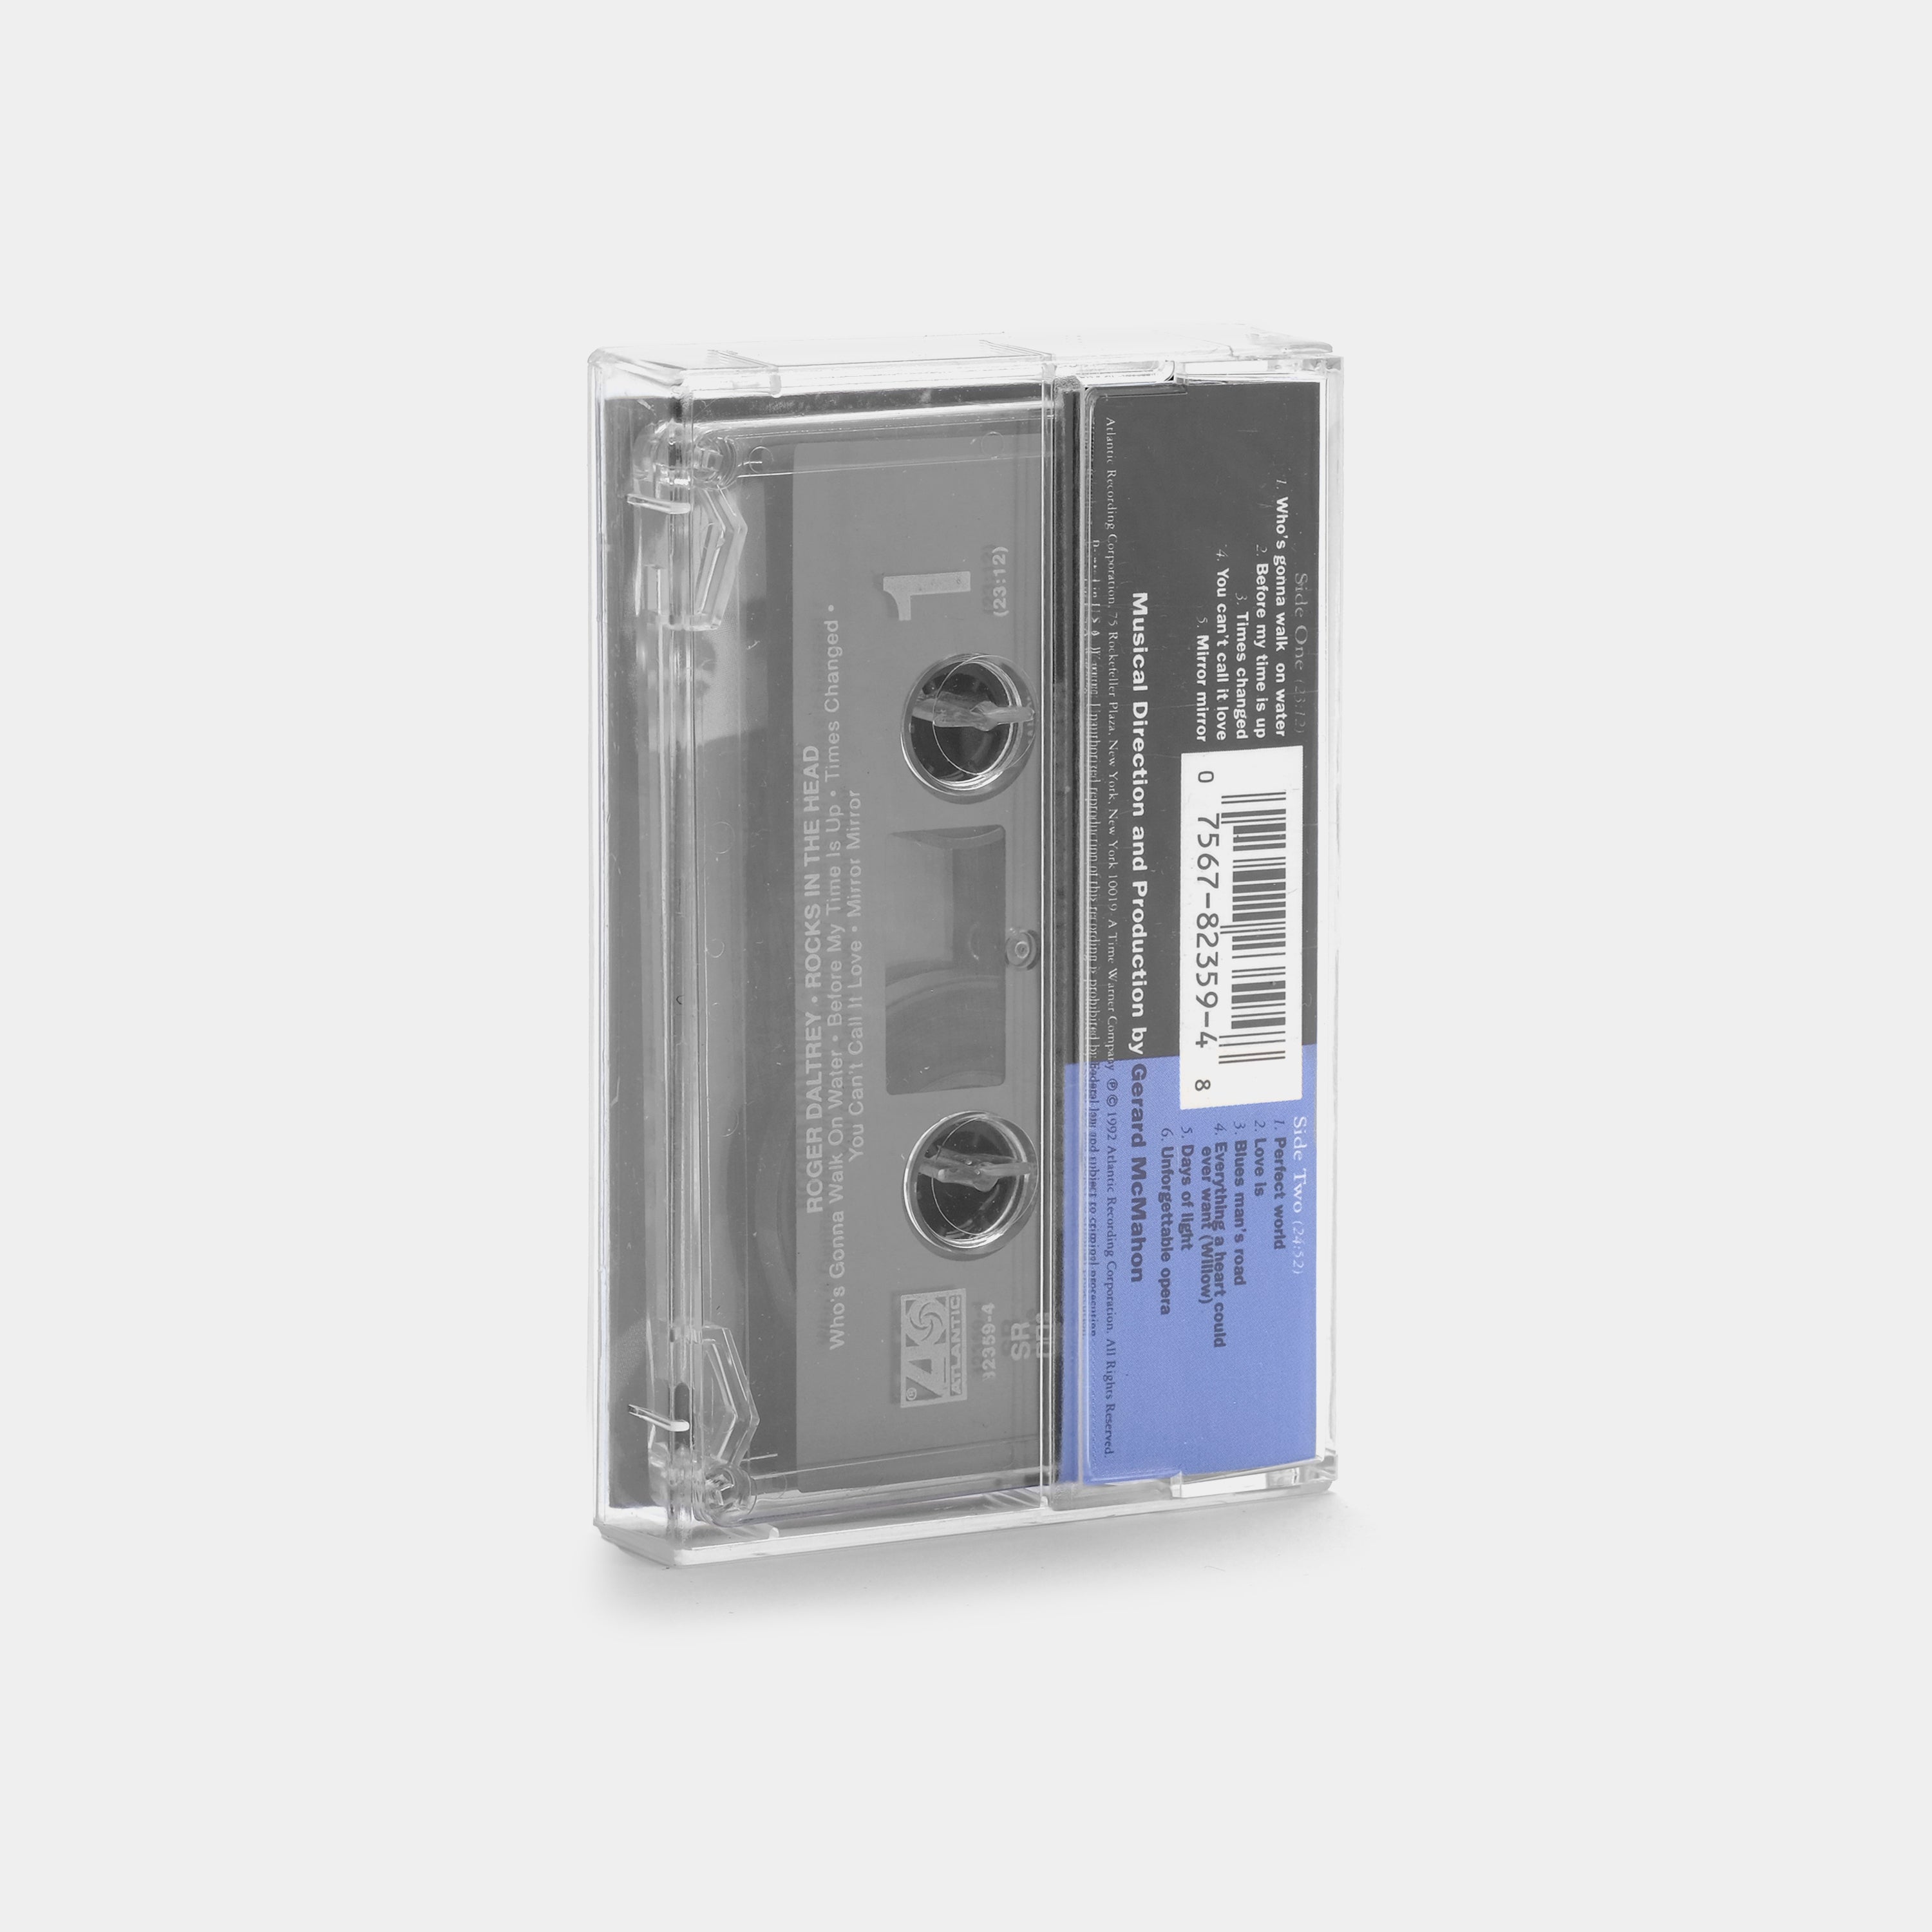 Roger Daltrey - Rocks In The Head Cassette Tape